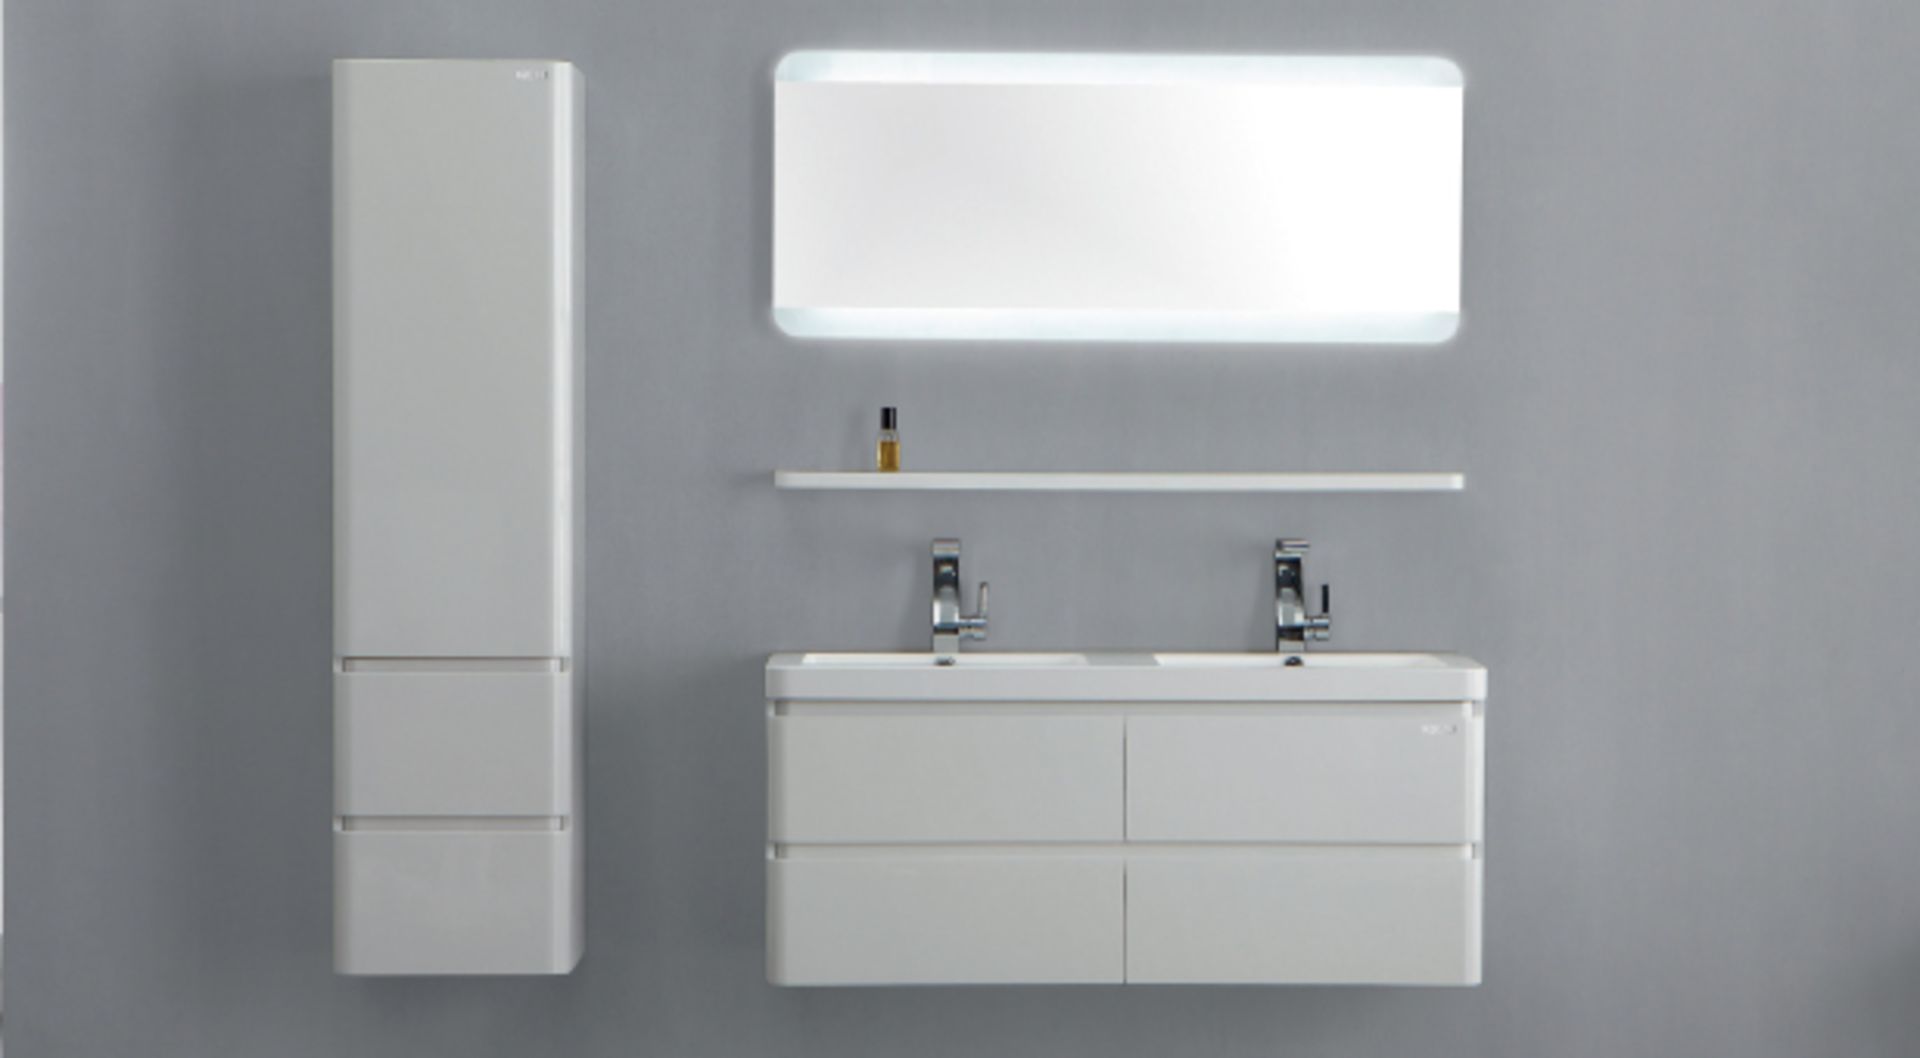 1 x Stylish Bathroom Edge Back-lit Mirror 60 - B Grade Stock - Ref:AMR11-060 - CL170 - Location: Not